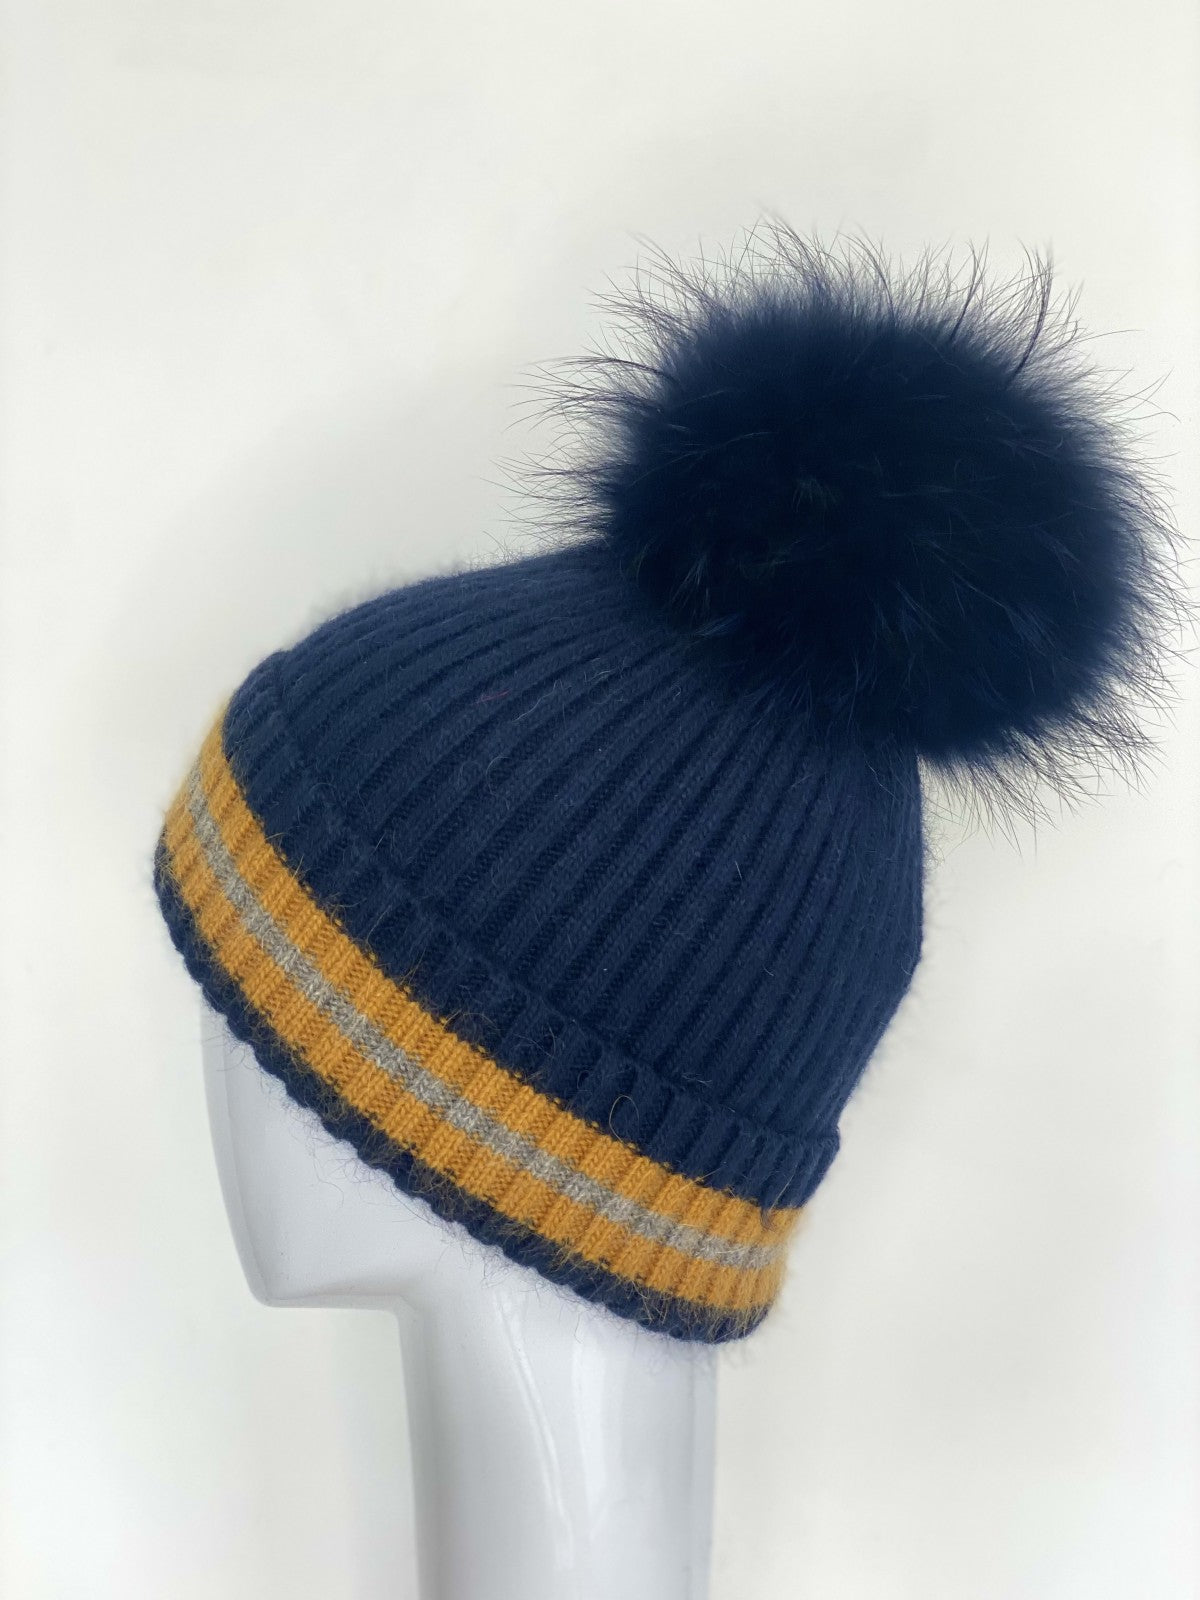 Mohair/Wool Hat in Navy/Grey/Golden Stripe